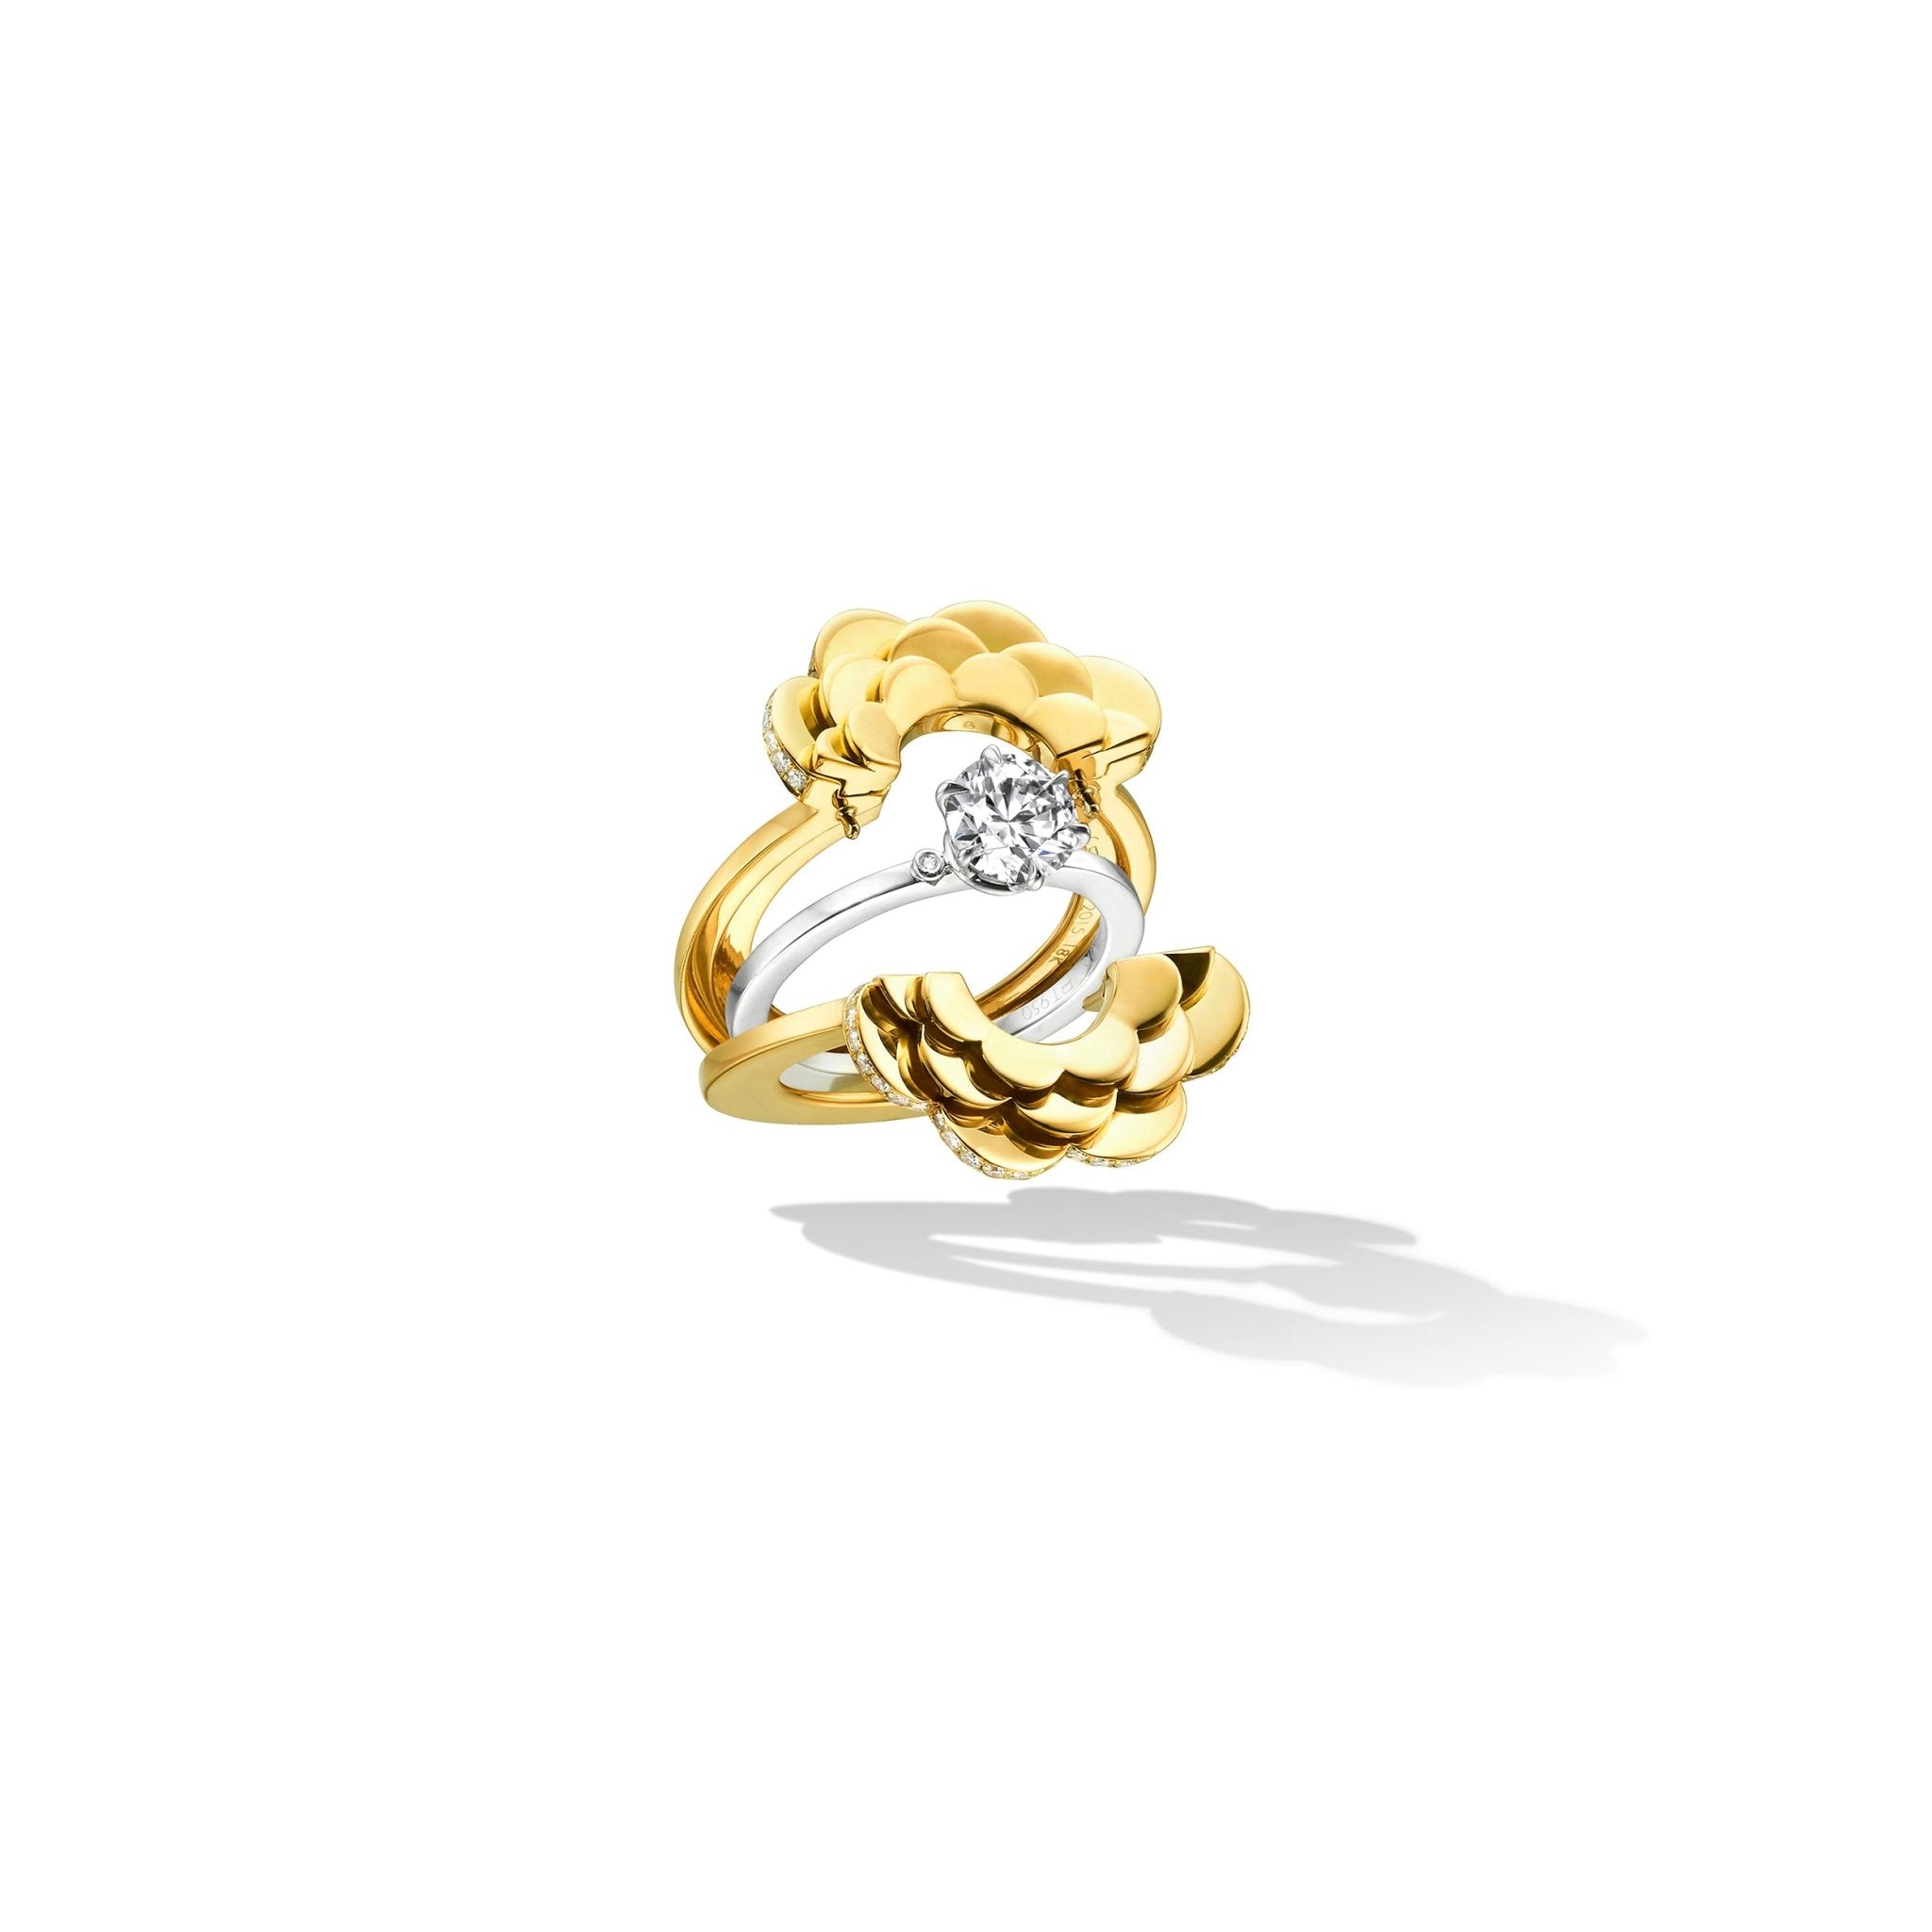 Buy Platinum Jewellery Online in India with Latest Designs 2015 | Online  jewelry, Jewelry branding, Jewelry